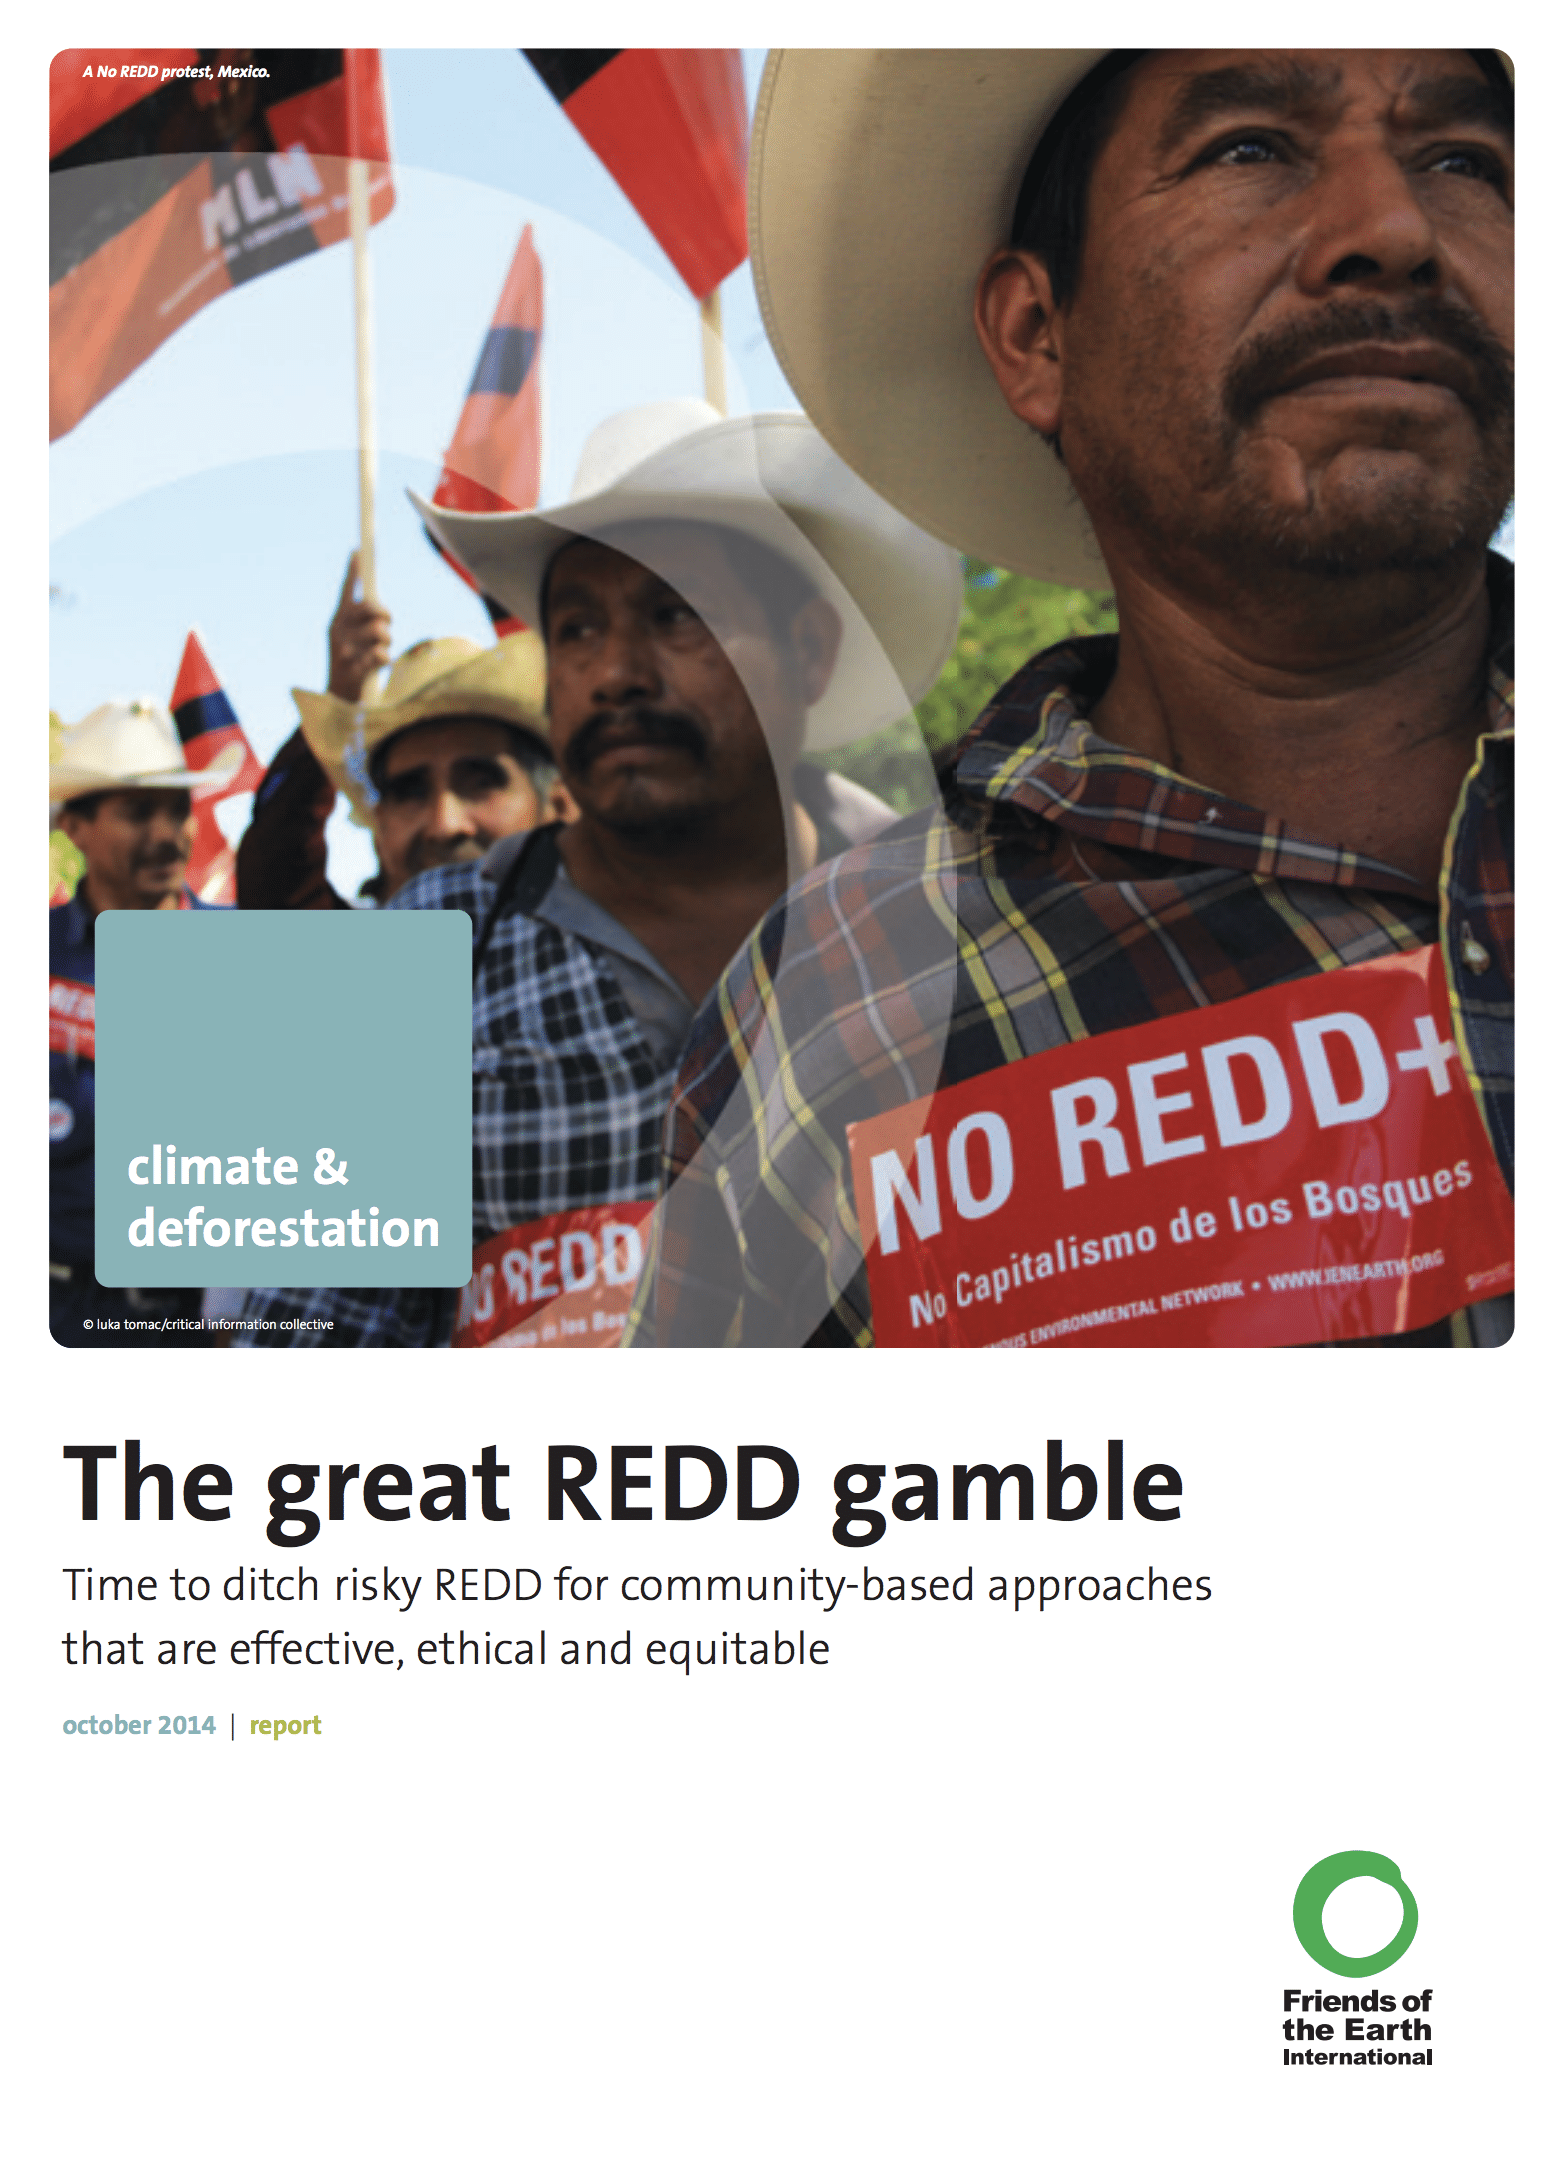 The Great REDD Gamble